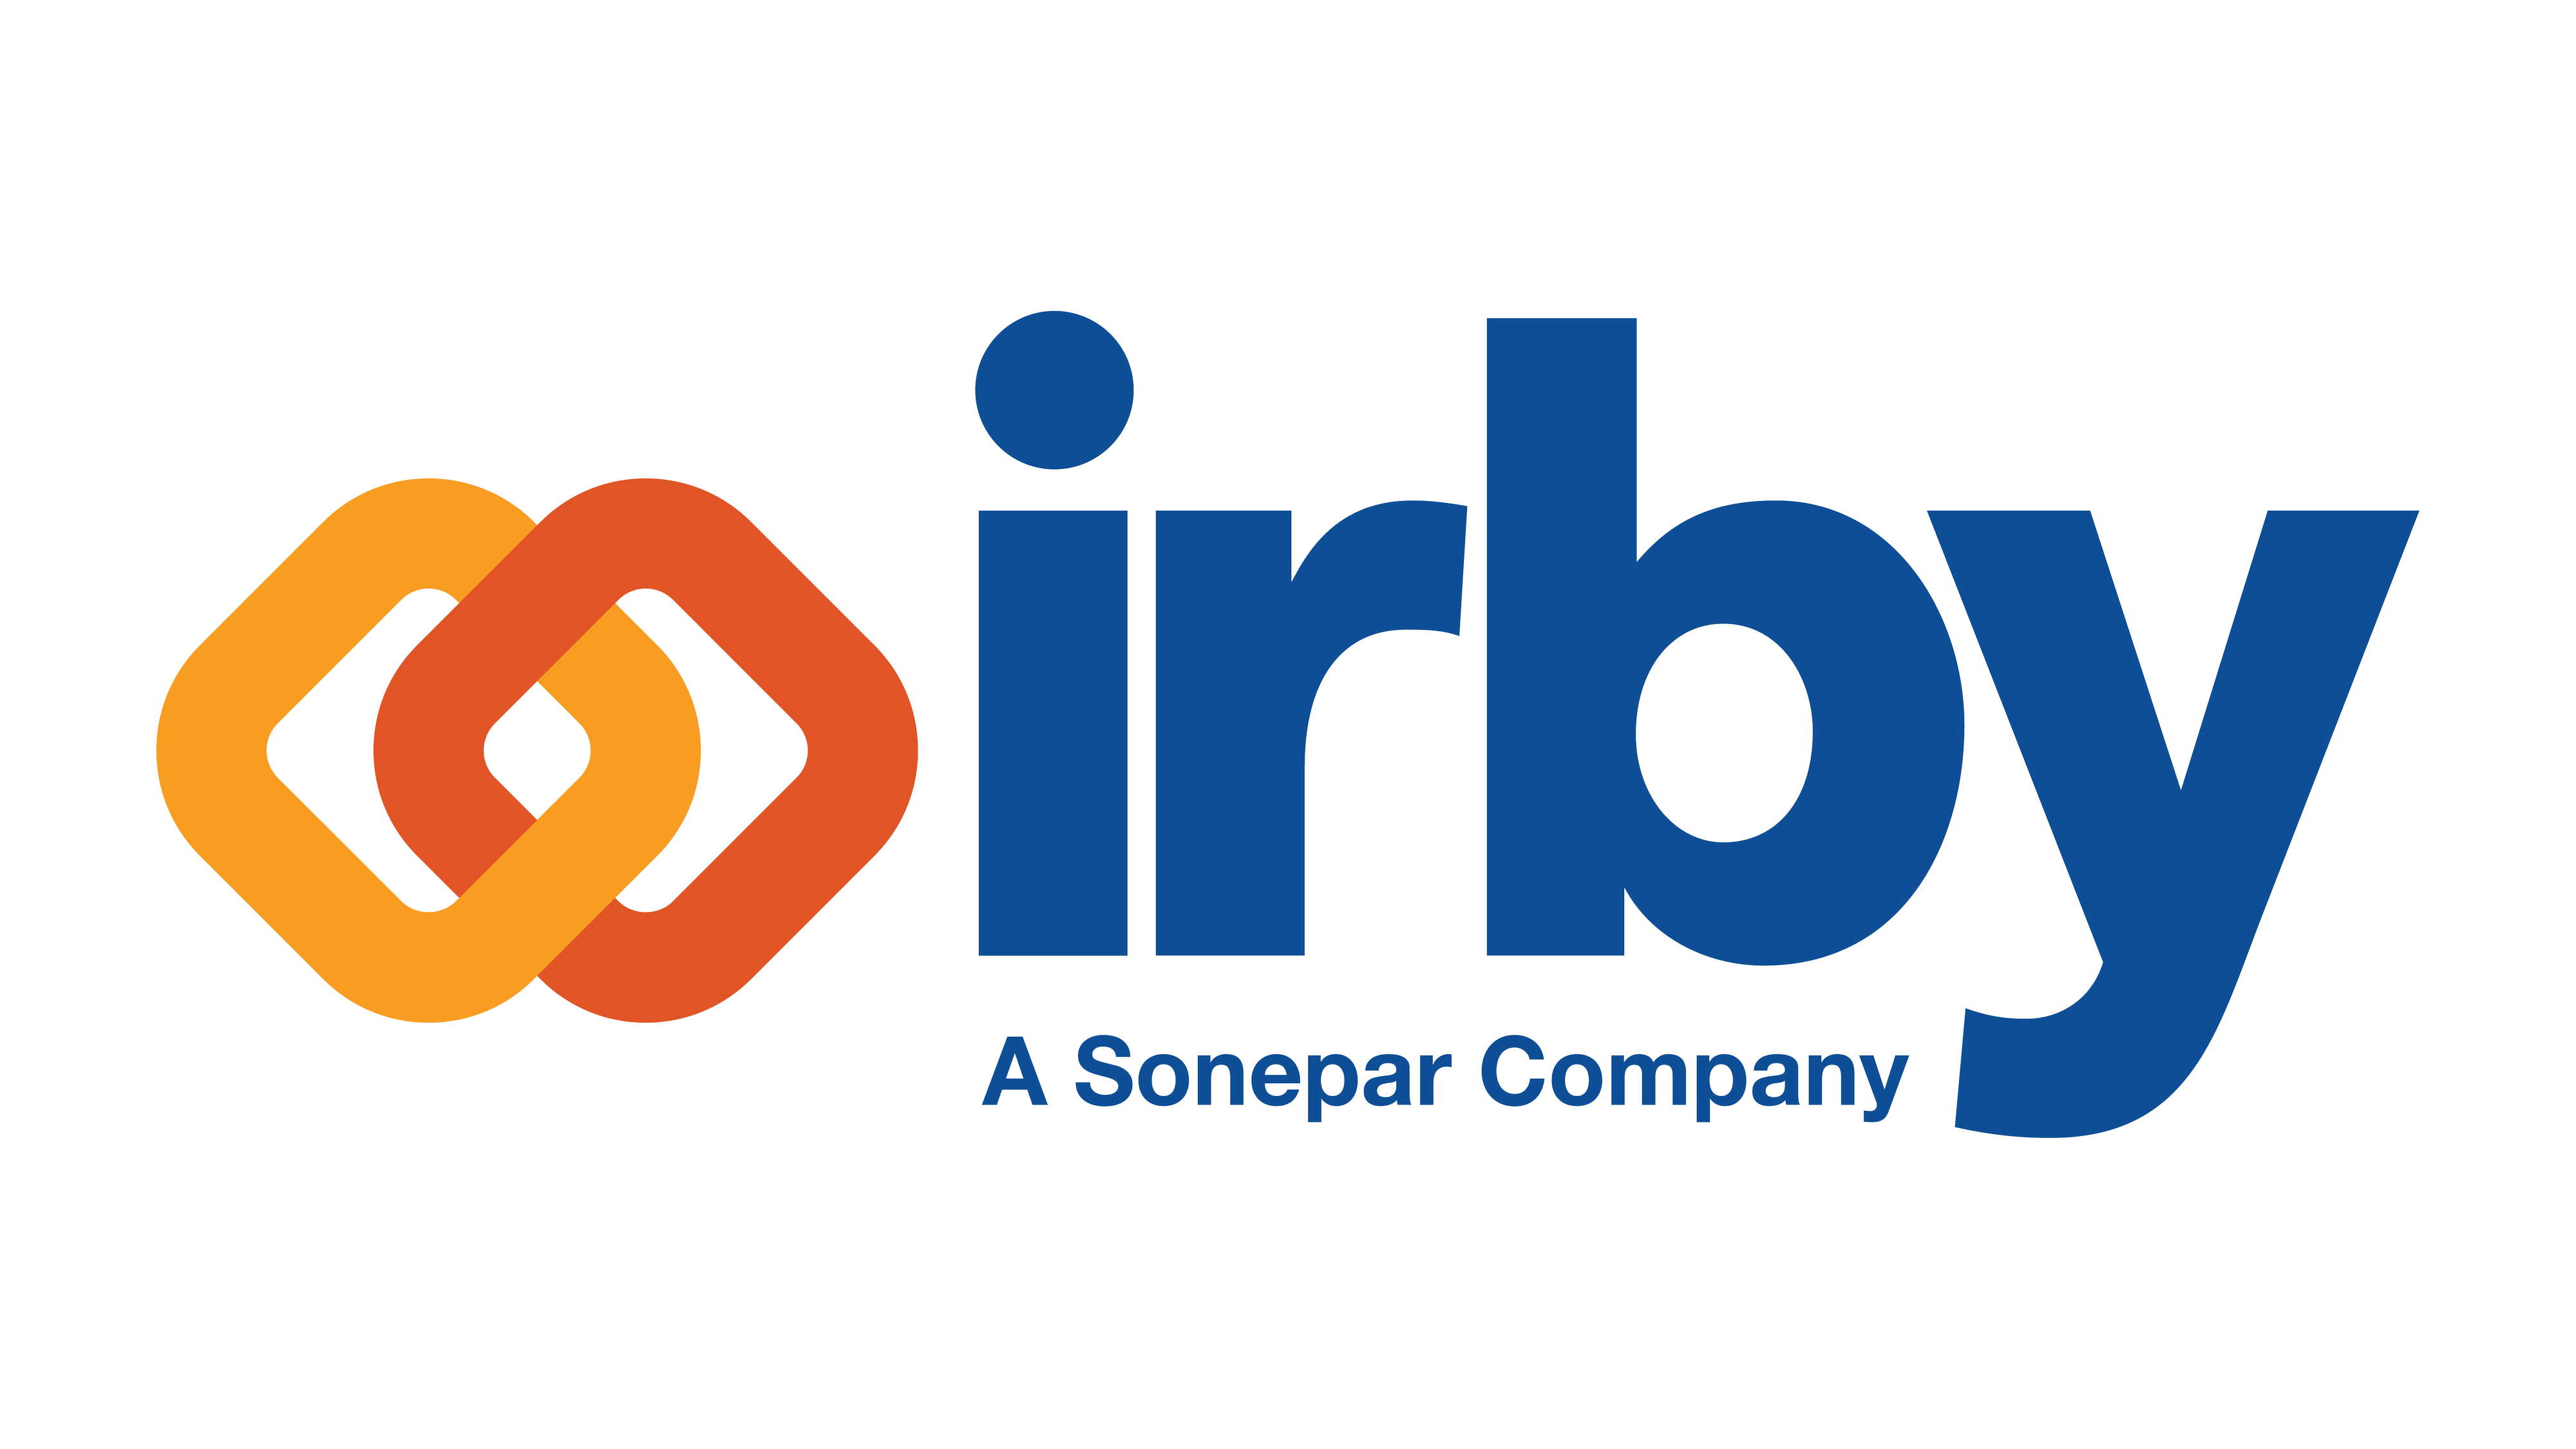 Irby Logo